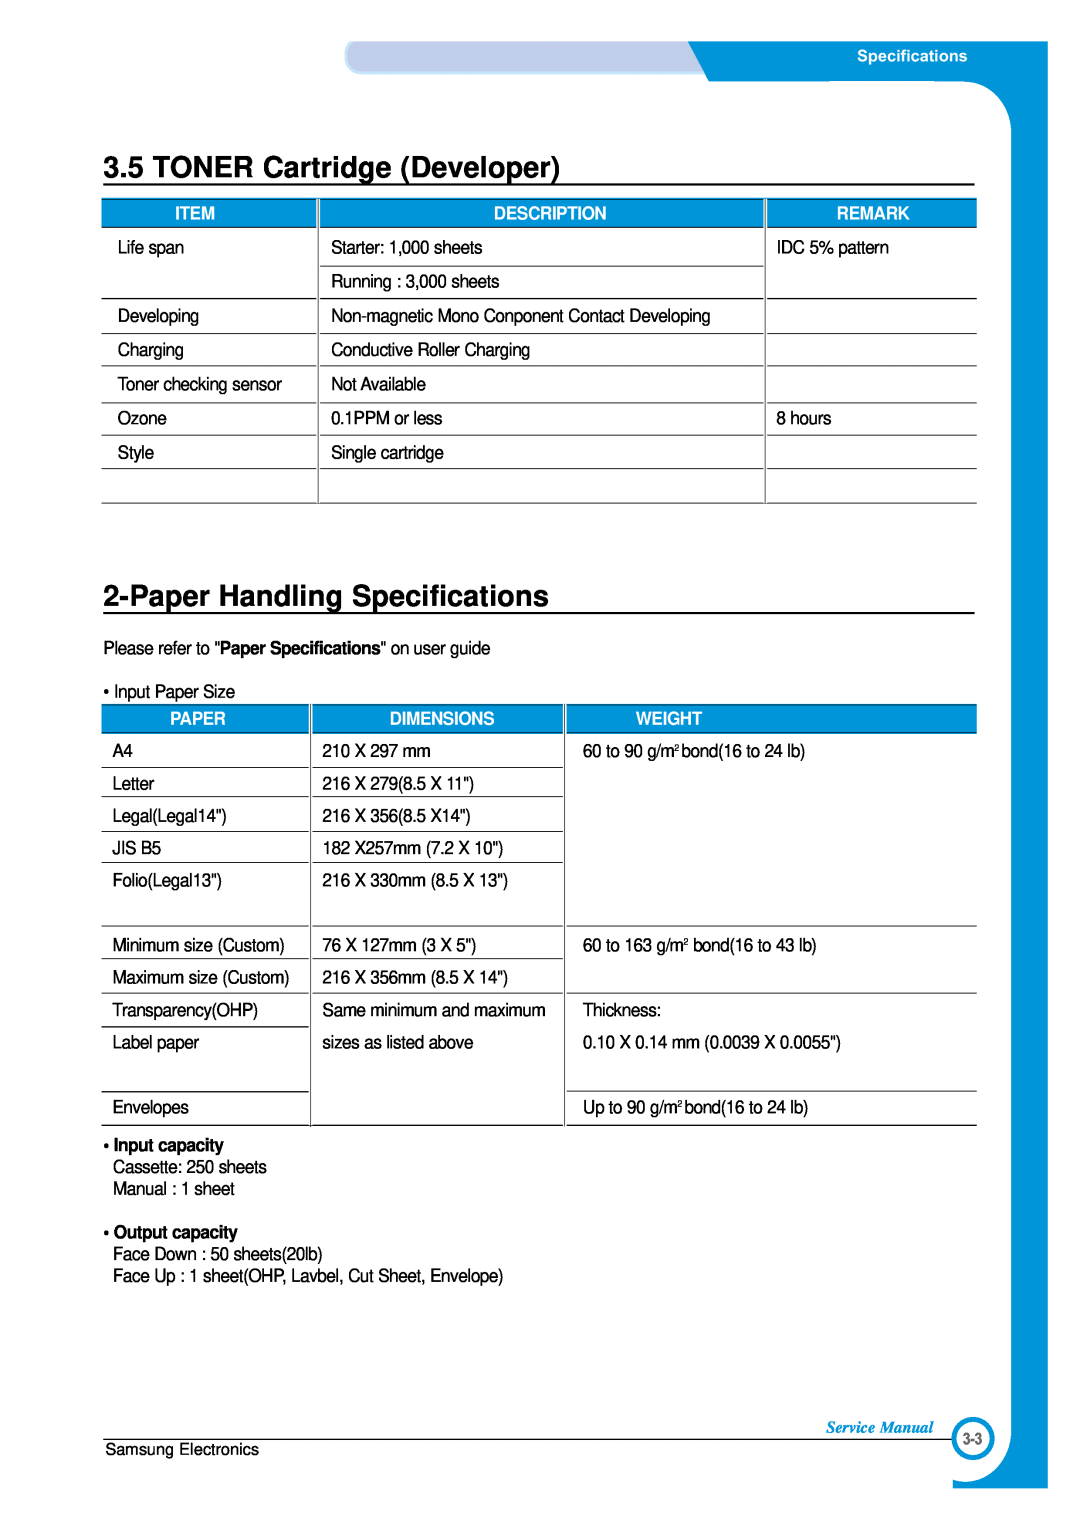 Samsung ML-1700 TONER Cartridge Developer, Paper Handling Specifications, Description, Remark, Dimensions, Weight 